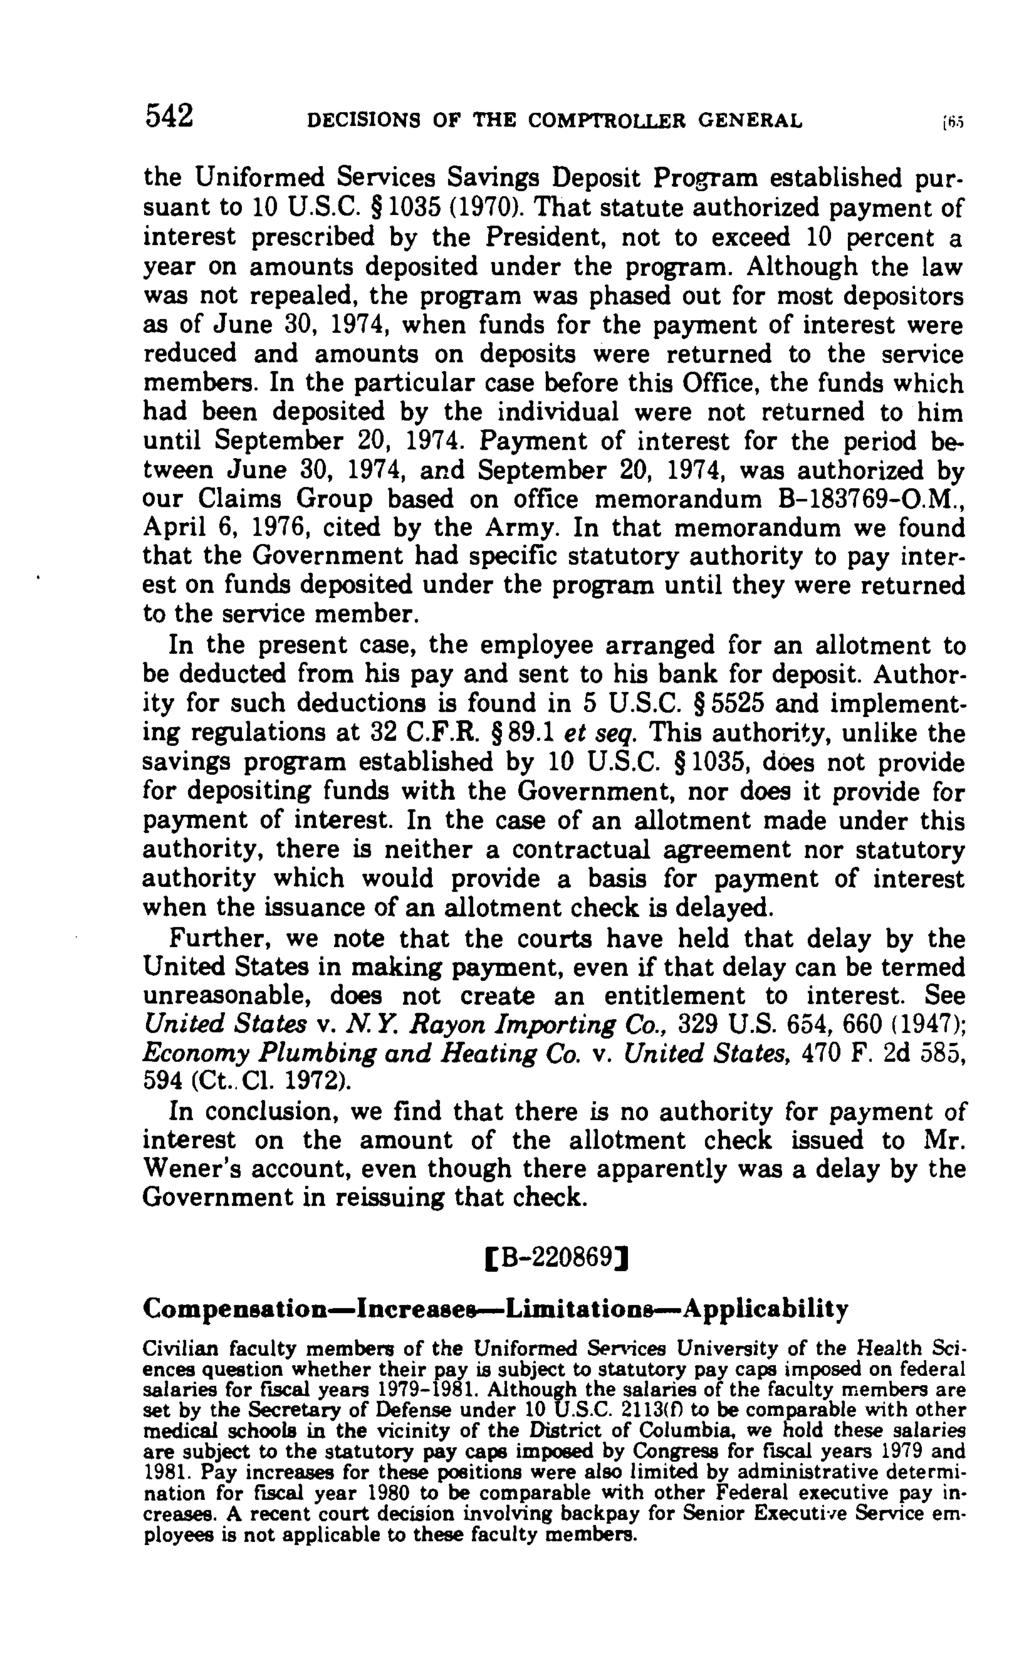 542 DECISIONS OF THE COMPTROLLER GENERAL the Uniformed Services Savings Deposit Program established pursuant to 10 U.S.C. 1035 (1970).